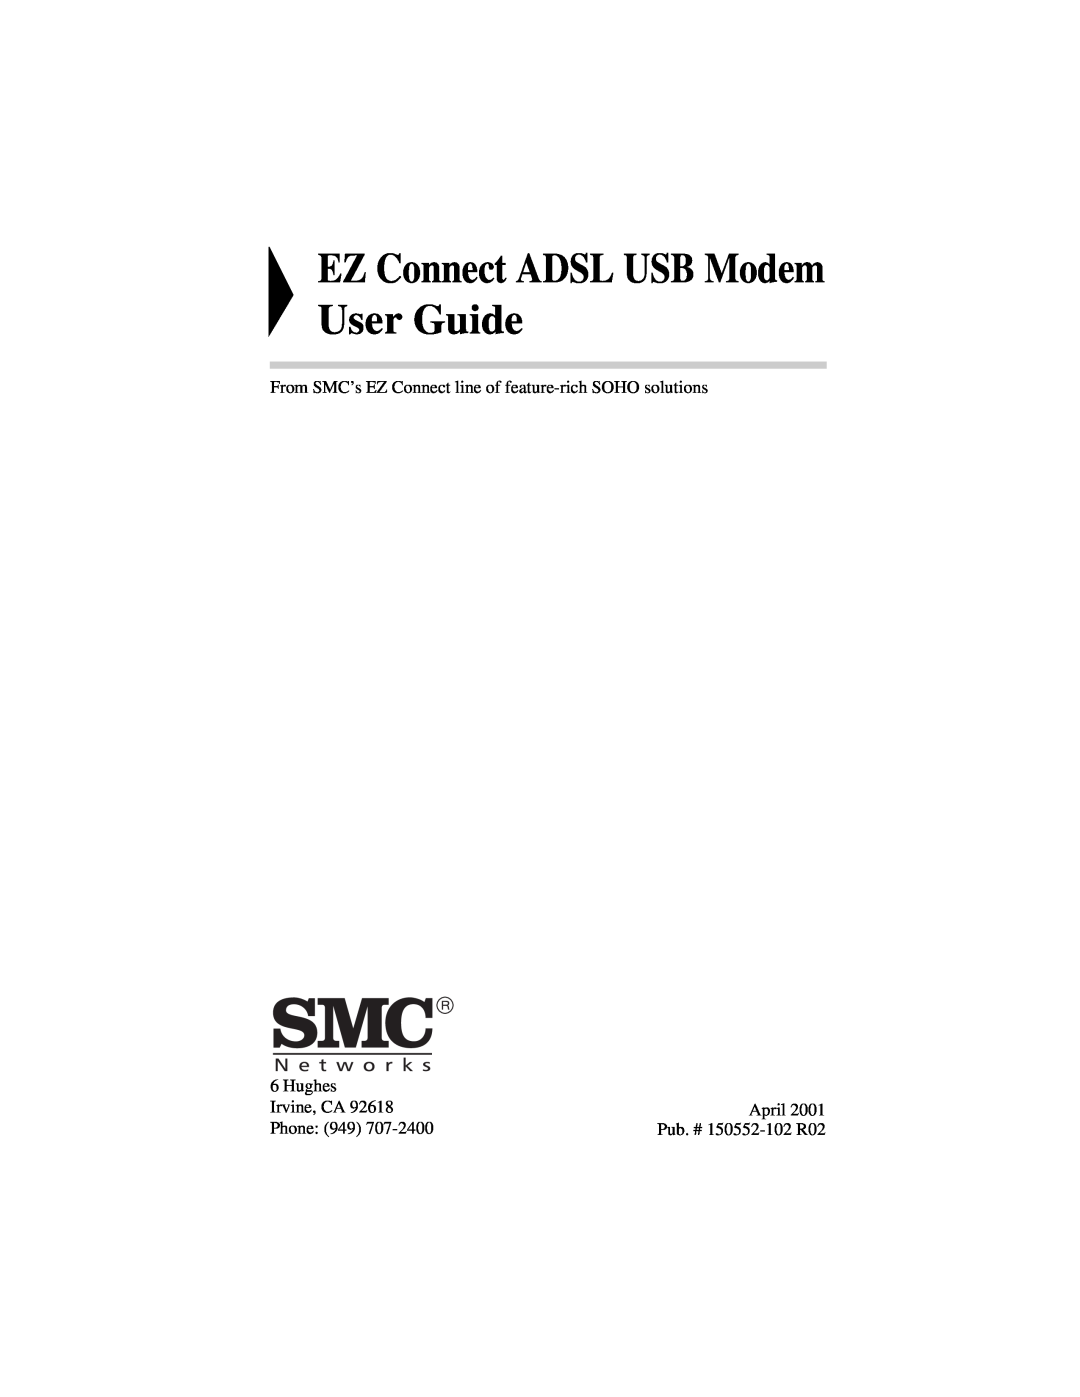 SMC Networks SMC7003-USB EZ Connect ADSL USB Modem User Guide, From SMC’s EZ Connect line of feature-rich SOHO solutions 